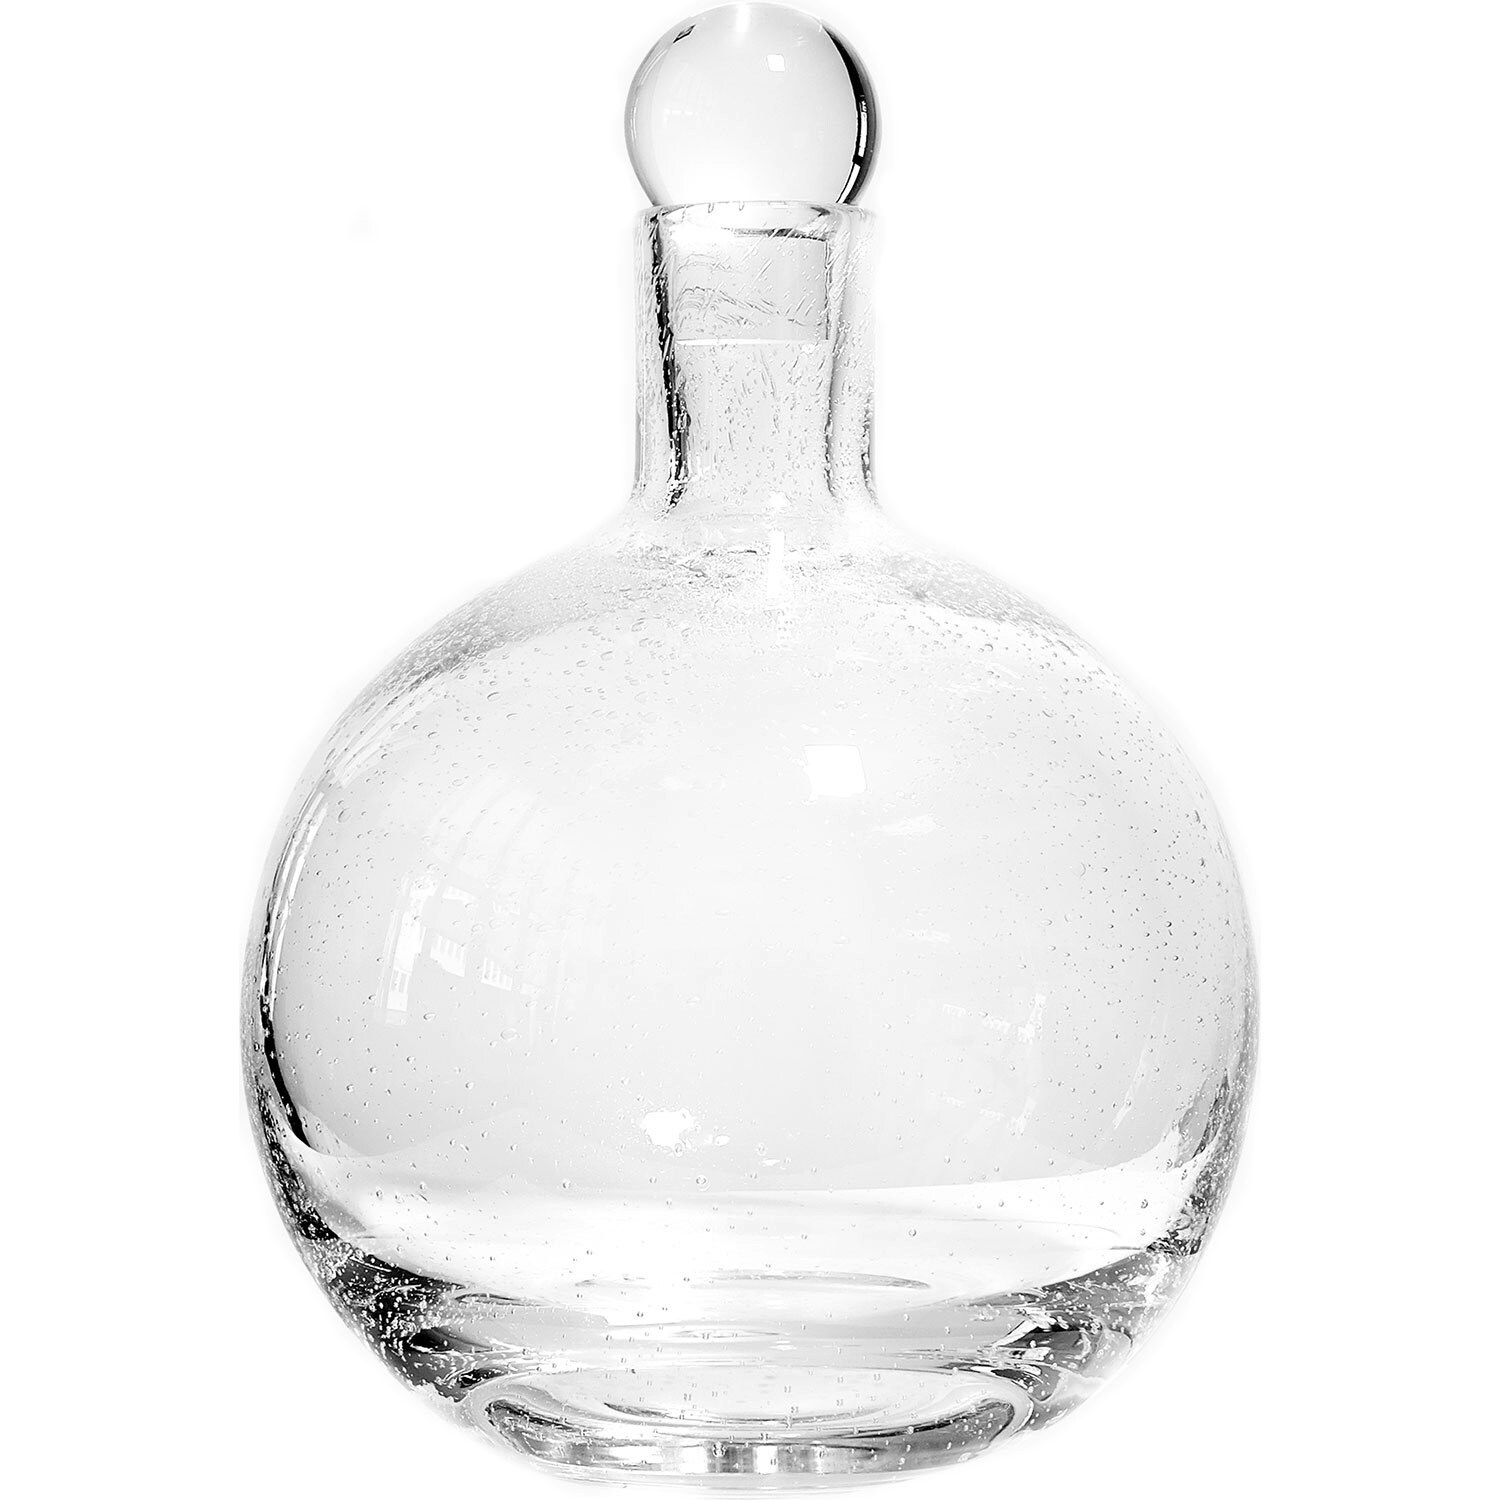 https://royaldesign.com/image/2/louise-roe-bubble-glass-carafe-round-0